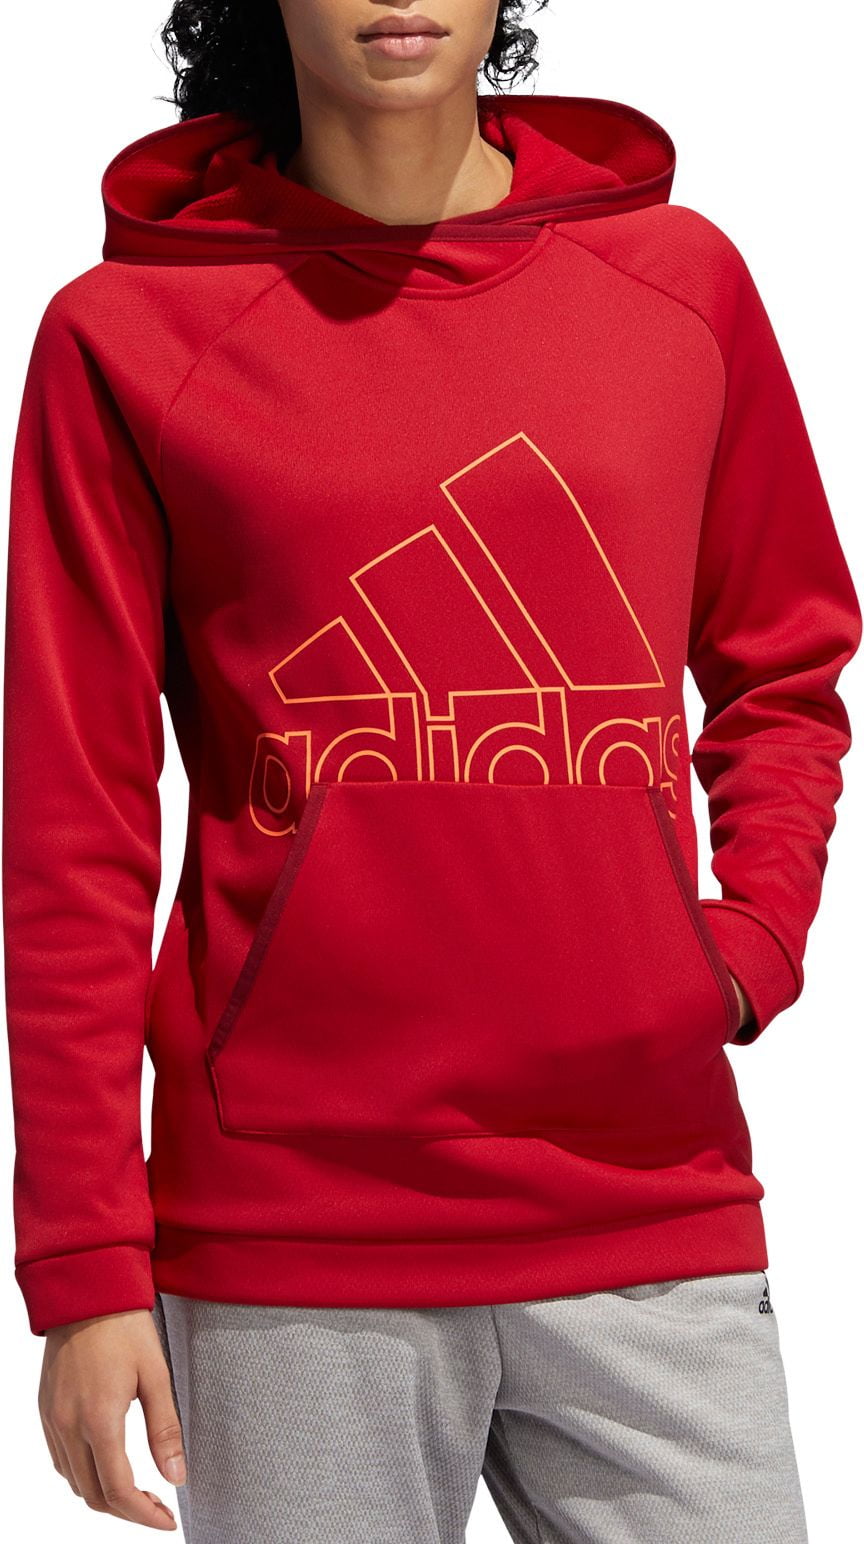 adidas women's team issue badge of sport hoodie